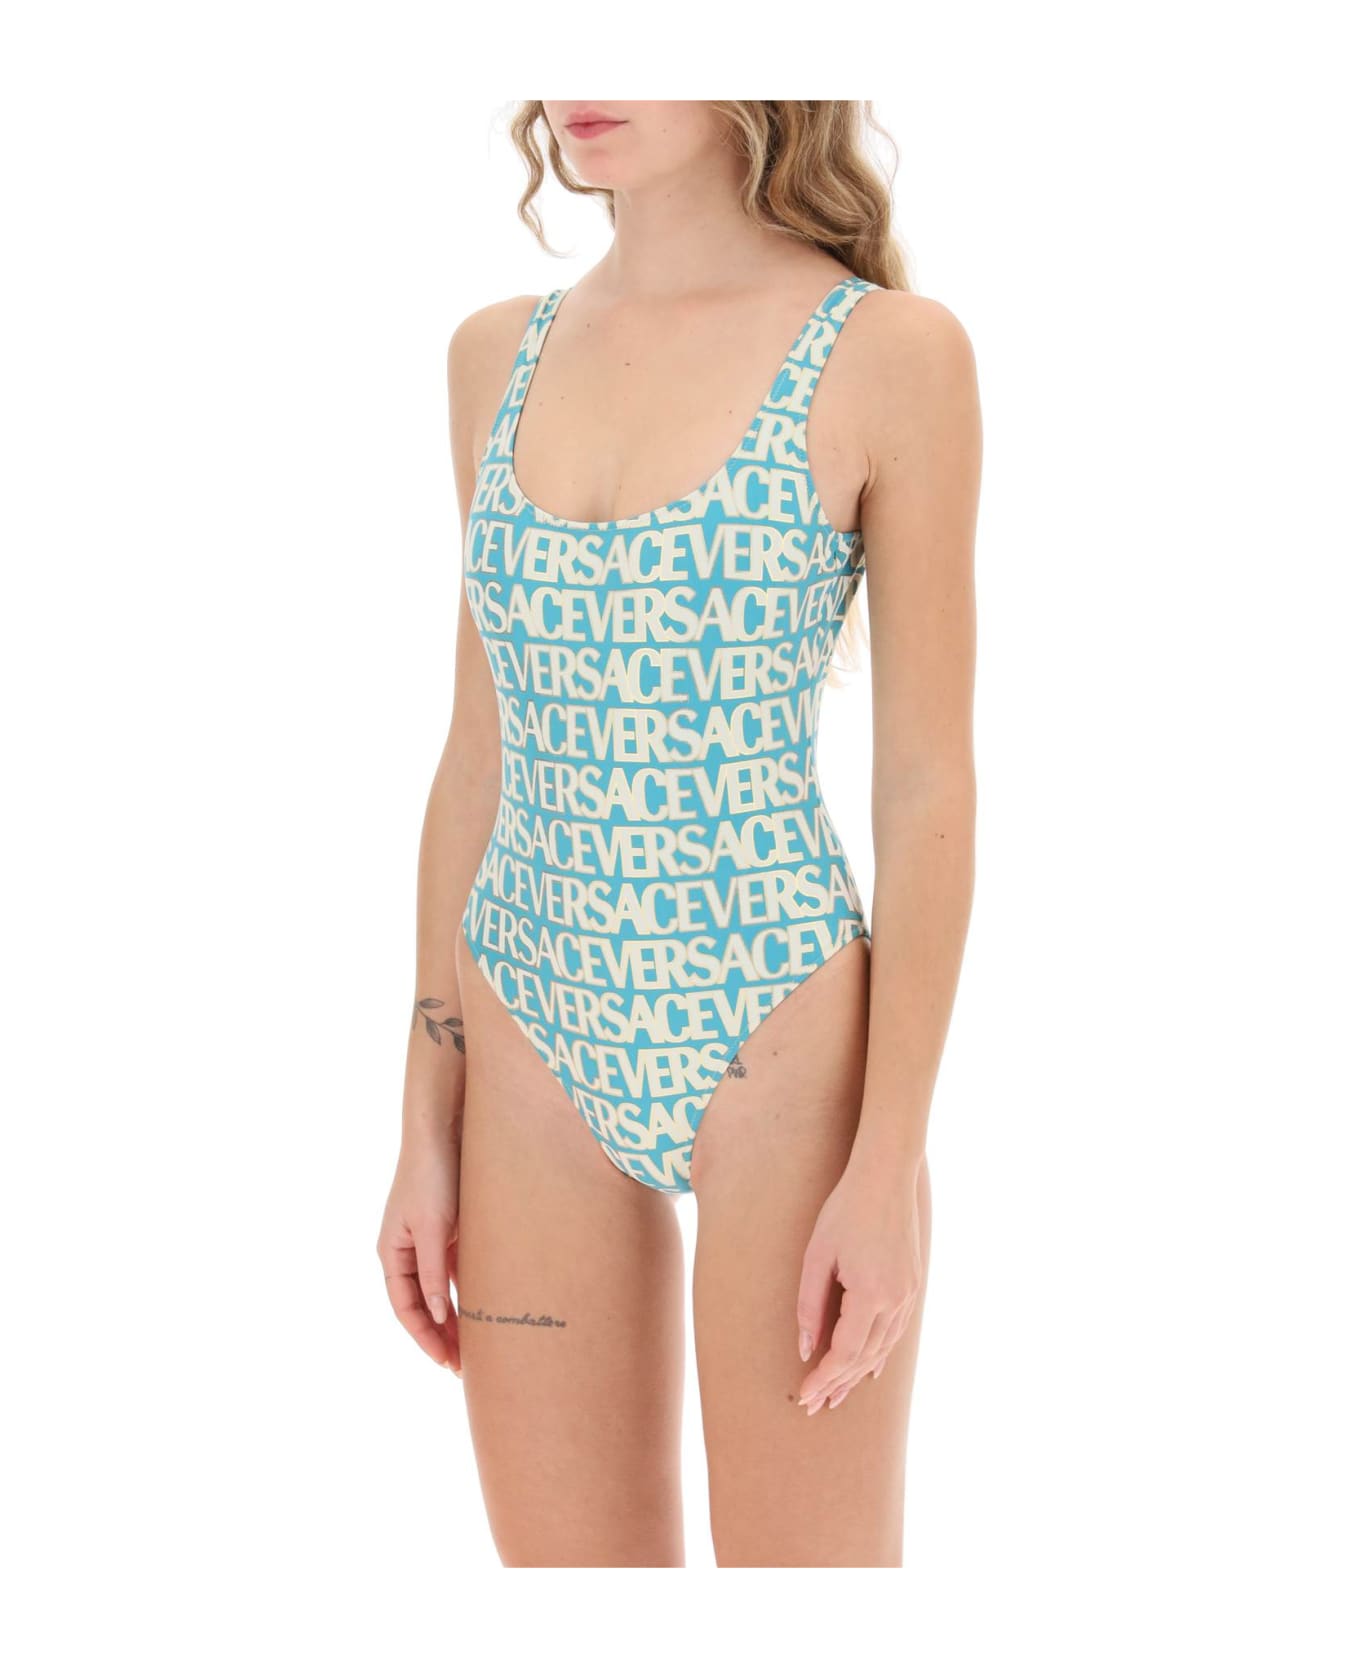 Versace Allover One-piece Swimwear - TURQUOISE AVORY (Light blue)